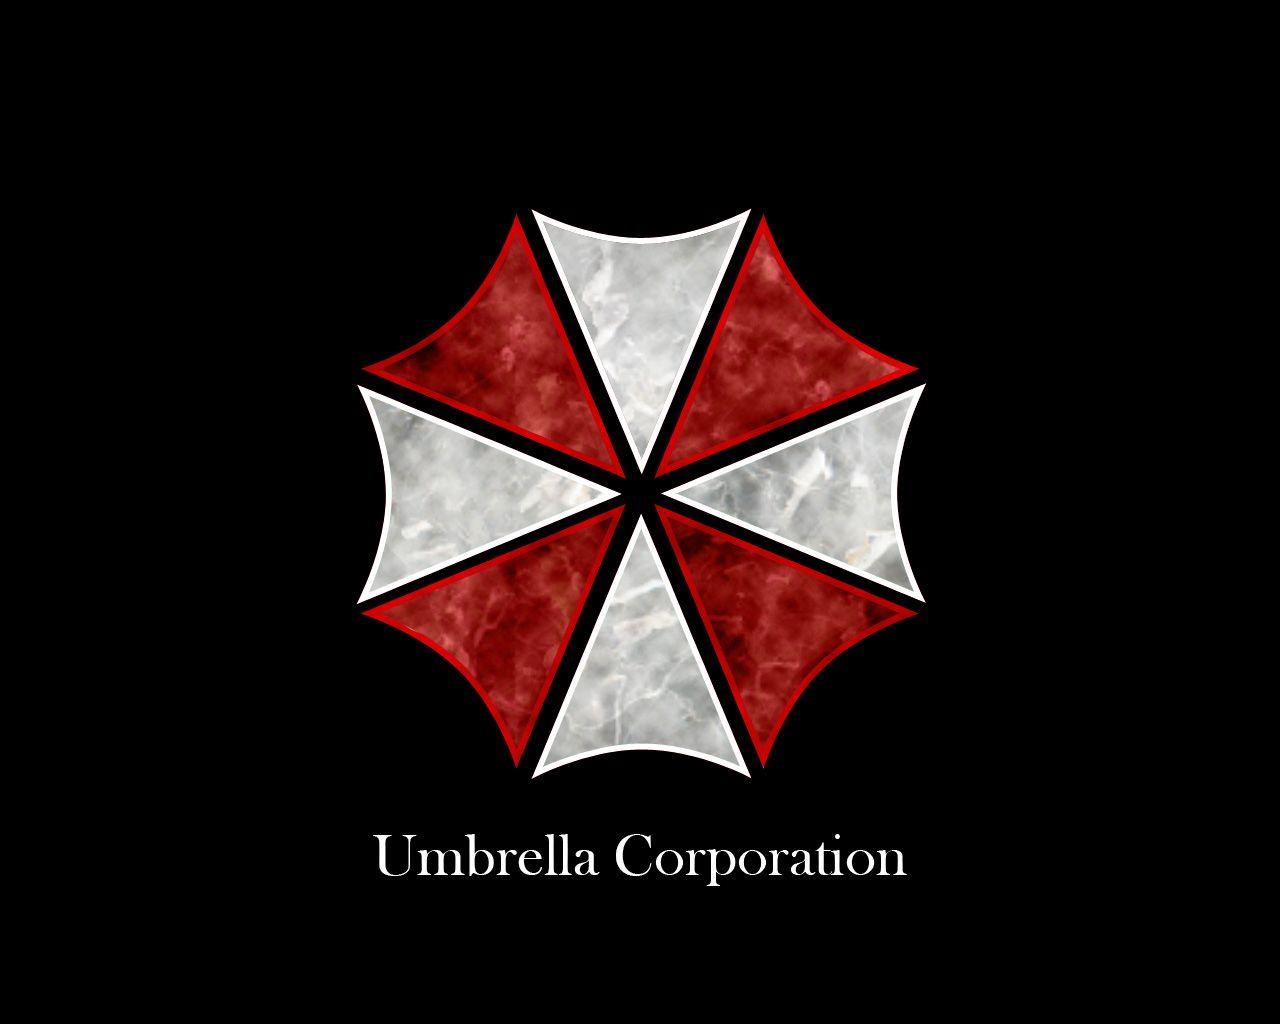 1280x1024px 134.78 KB Umbrella Corporation